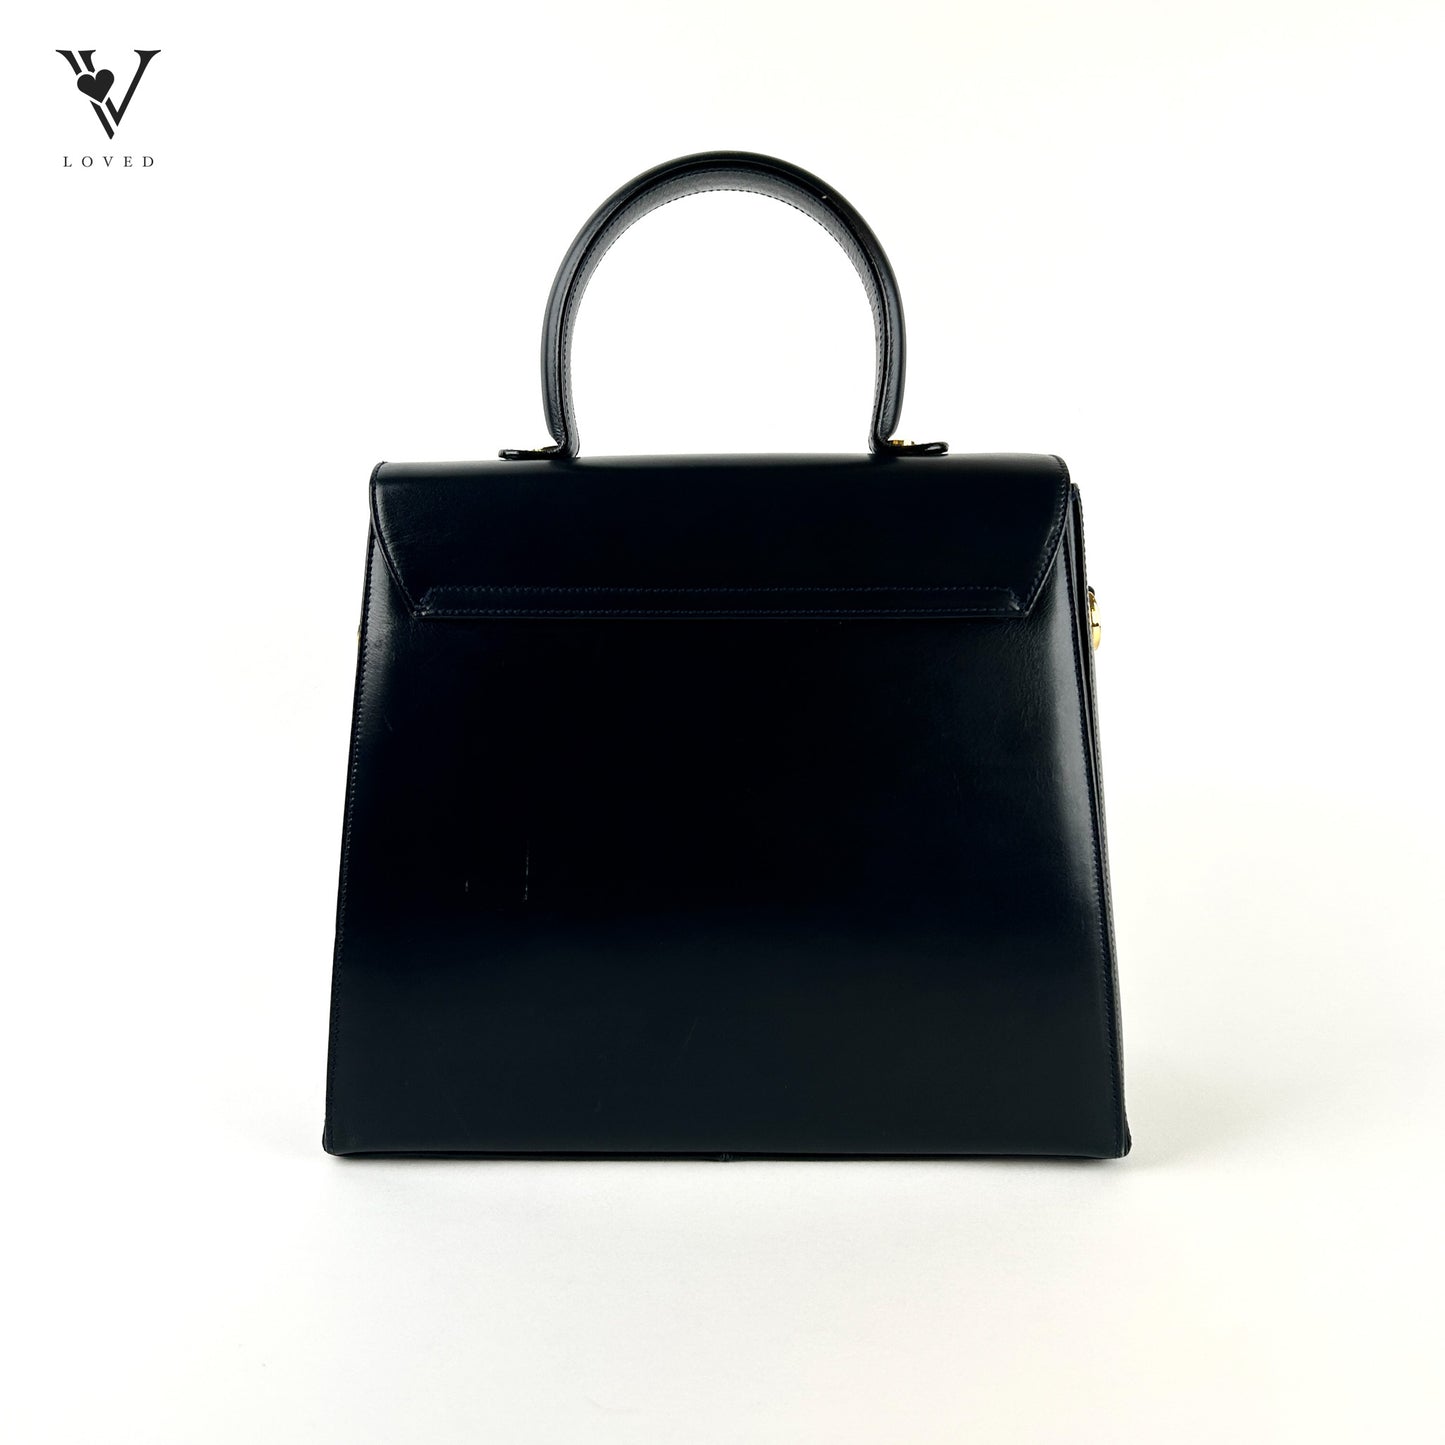 Gancini Two-Way Vintage Handbag in Black Smooth Leather